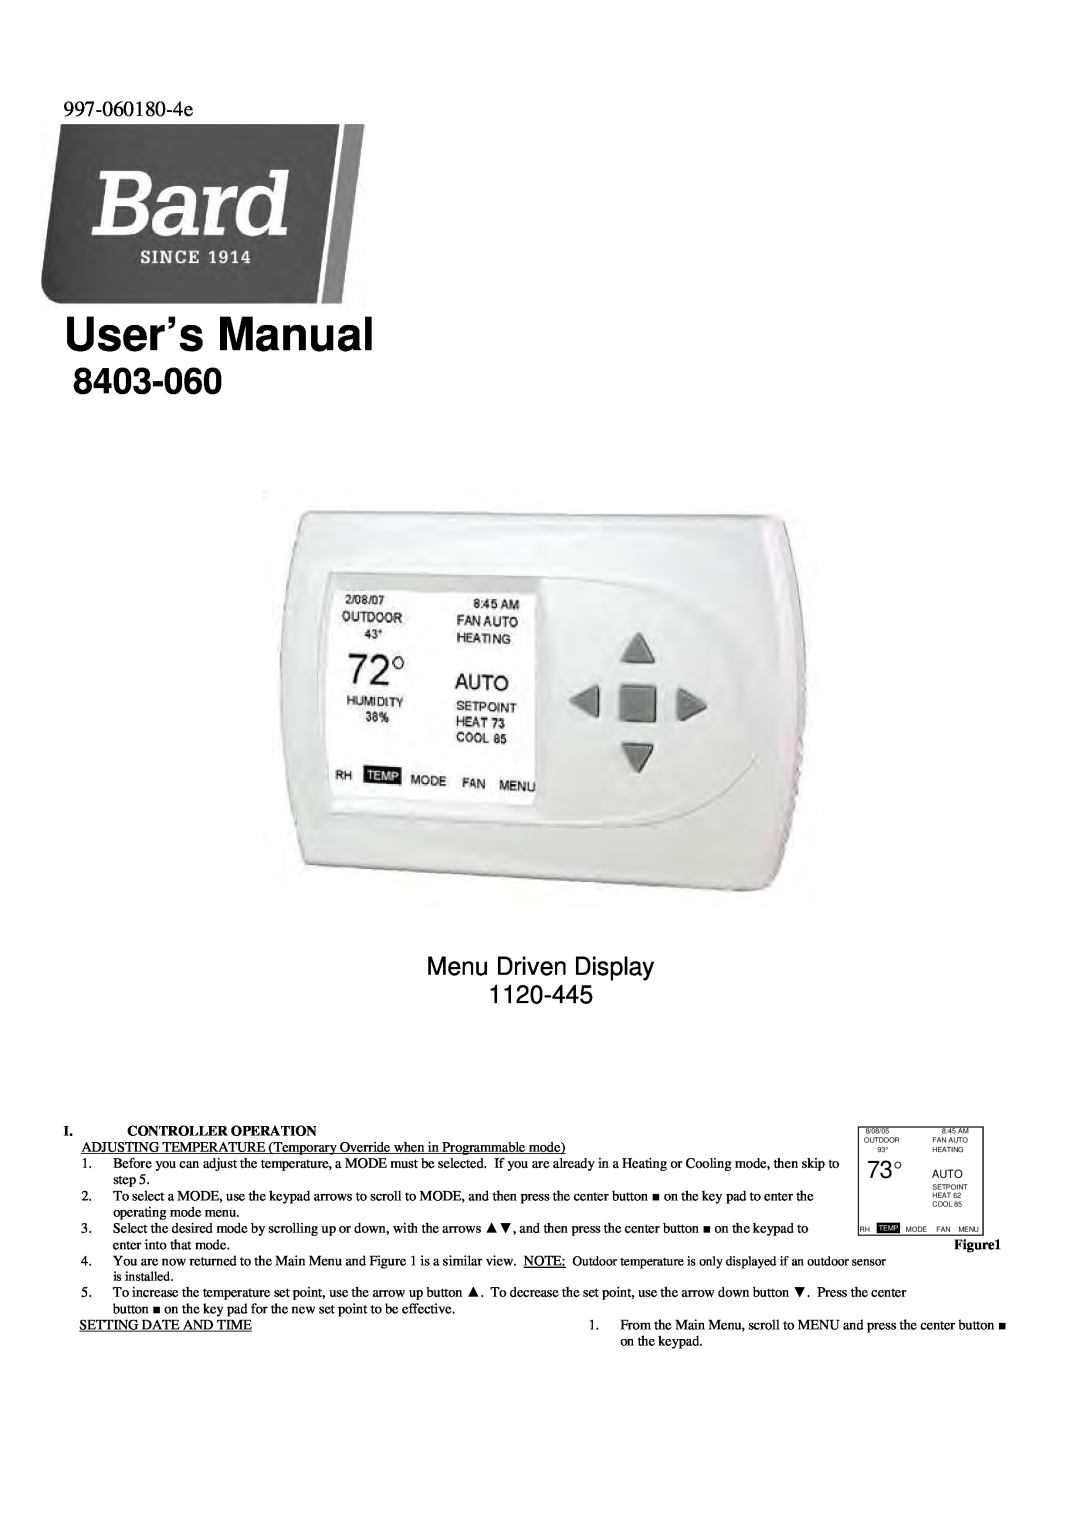 Bard 8403-060 user manual 997-060180-4e, User’s Manual, Menu Driven Display 1120-445, I. Controller Operation 